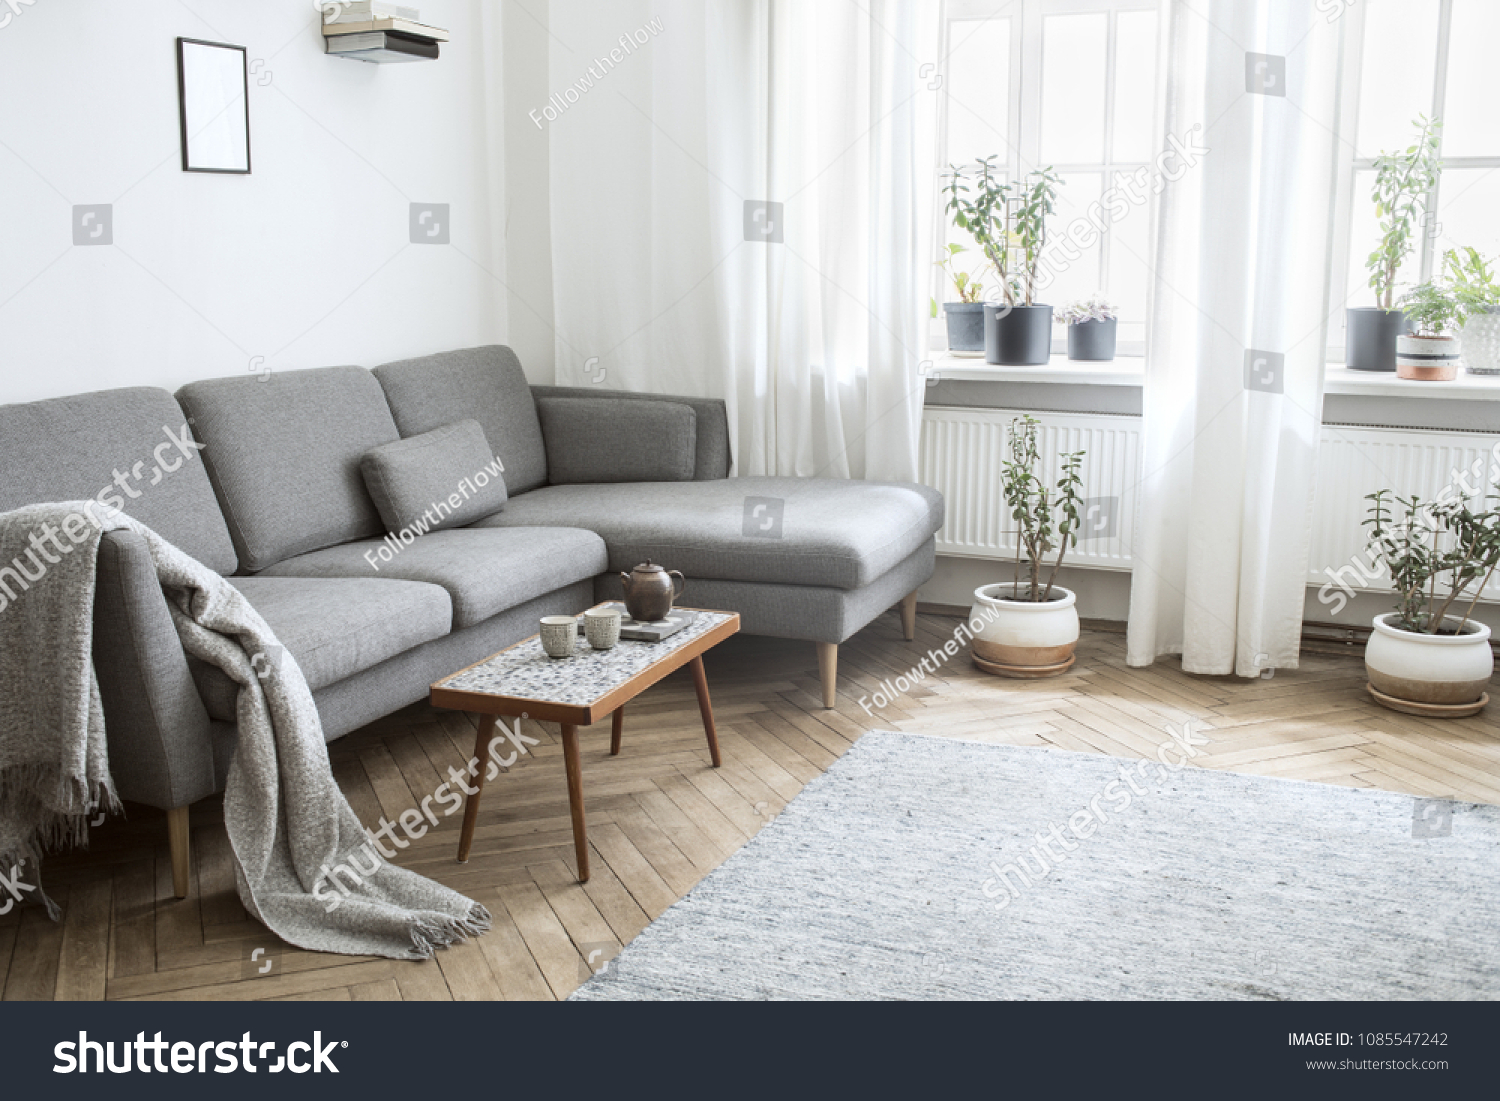 Stylish Scandinavian Interior Living Room Small Interiors Stock Image 1085547242,Bedroom Asian Paints Interior Design